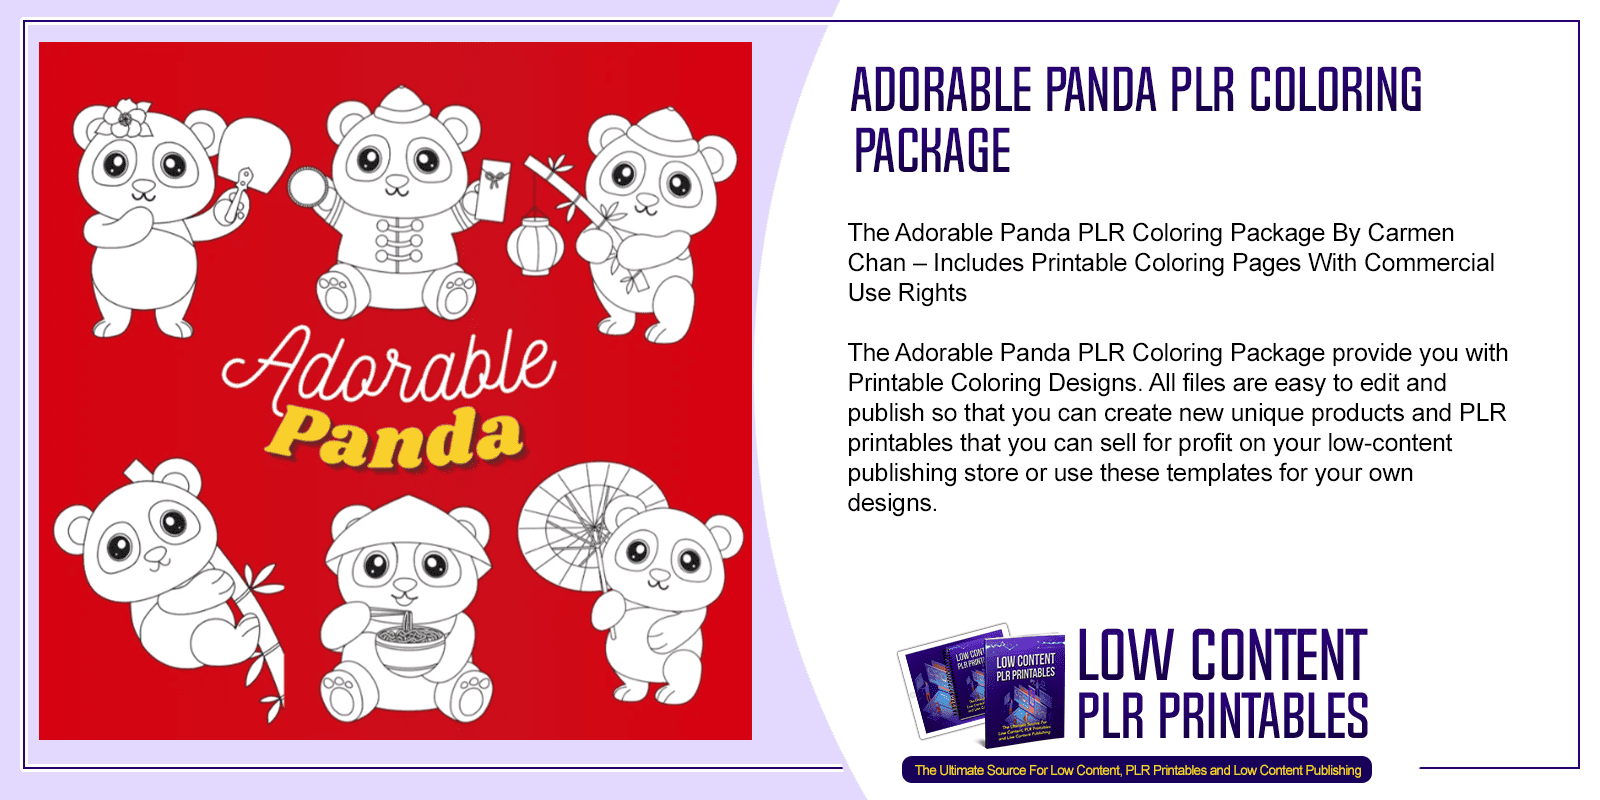 Adorable Panda PLR Coloring Package